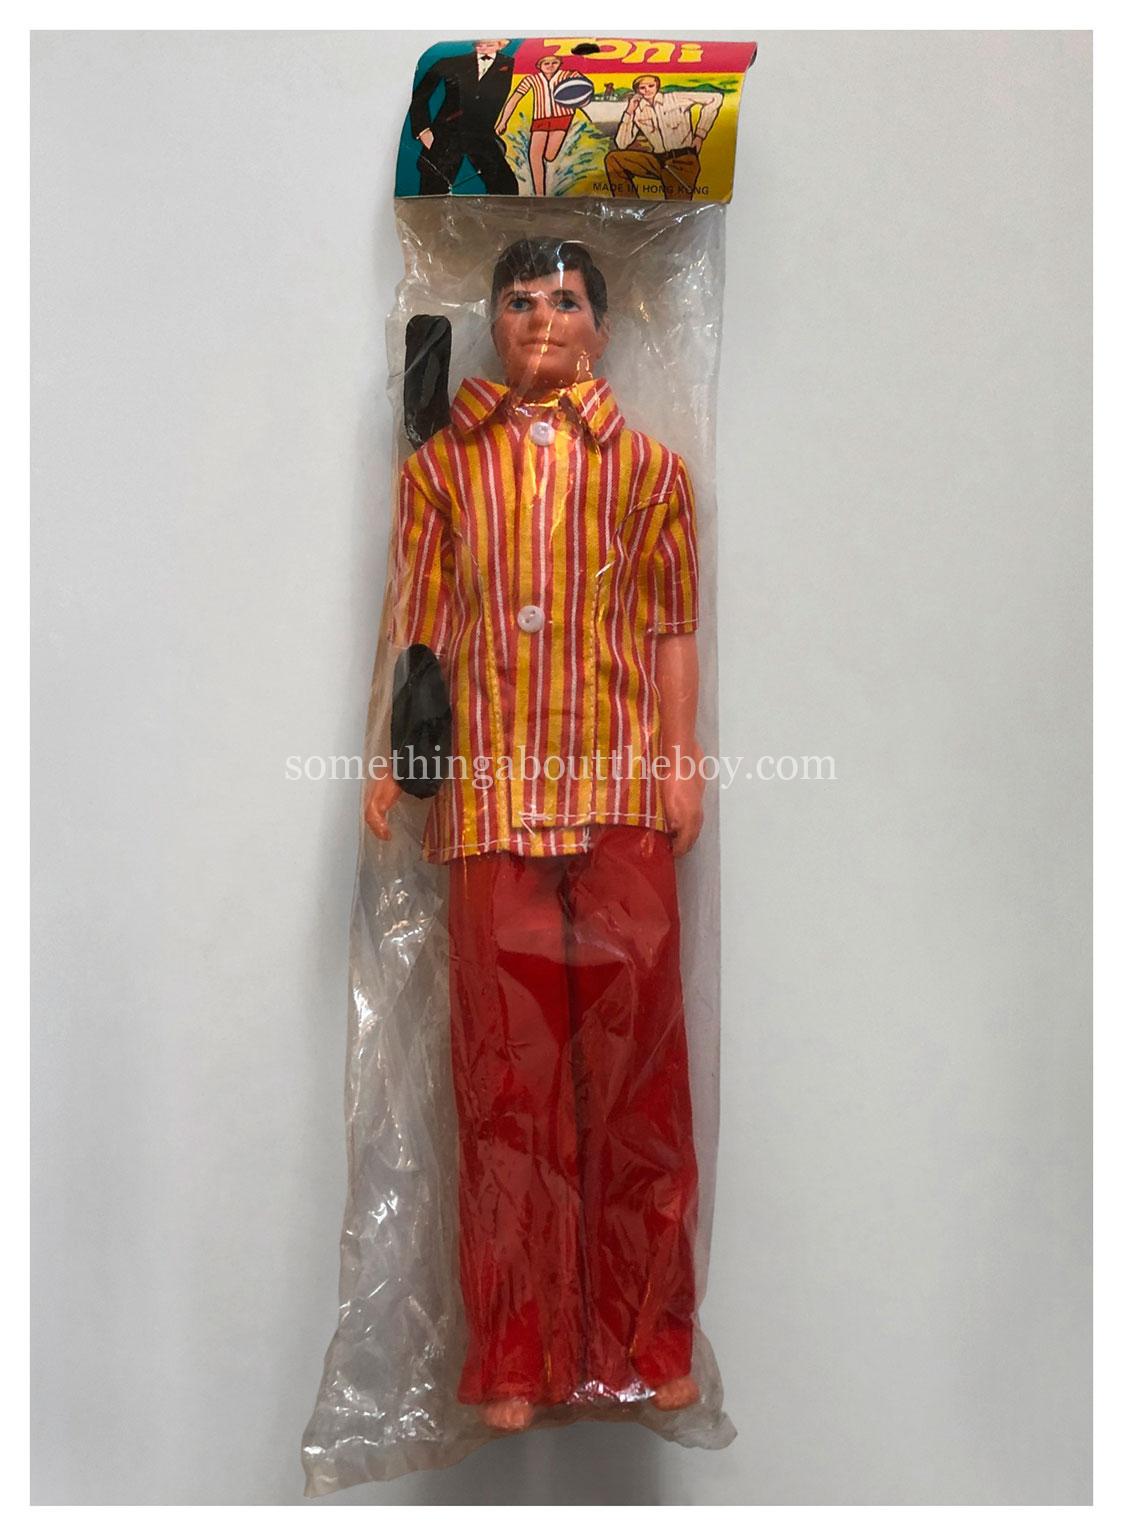 1970s Toni doll in original packaging